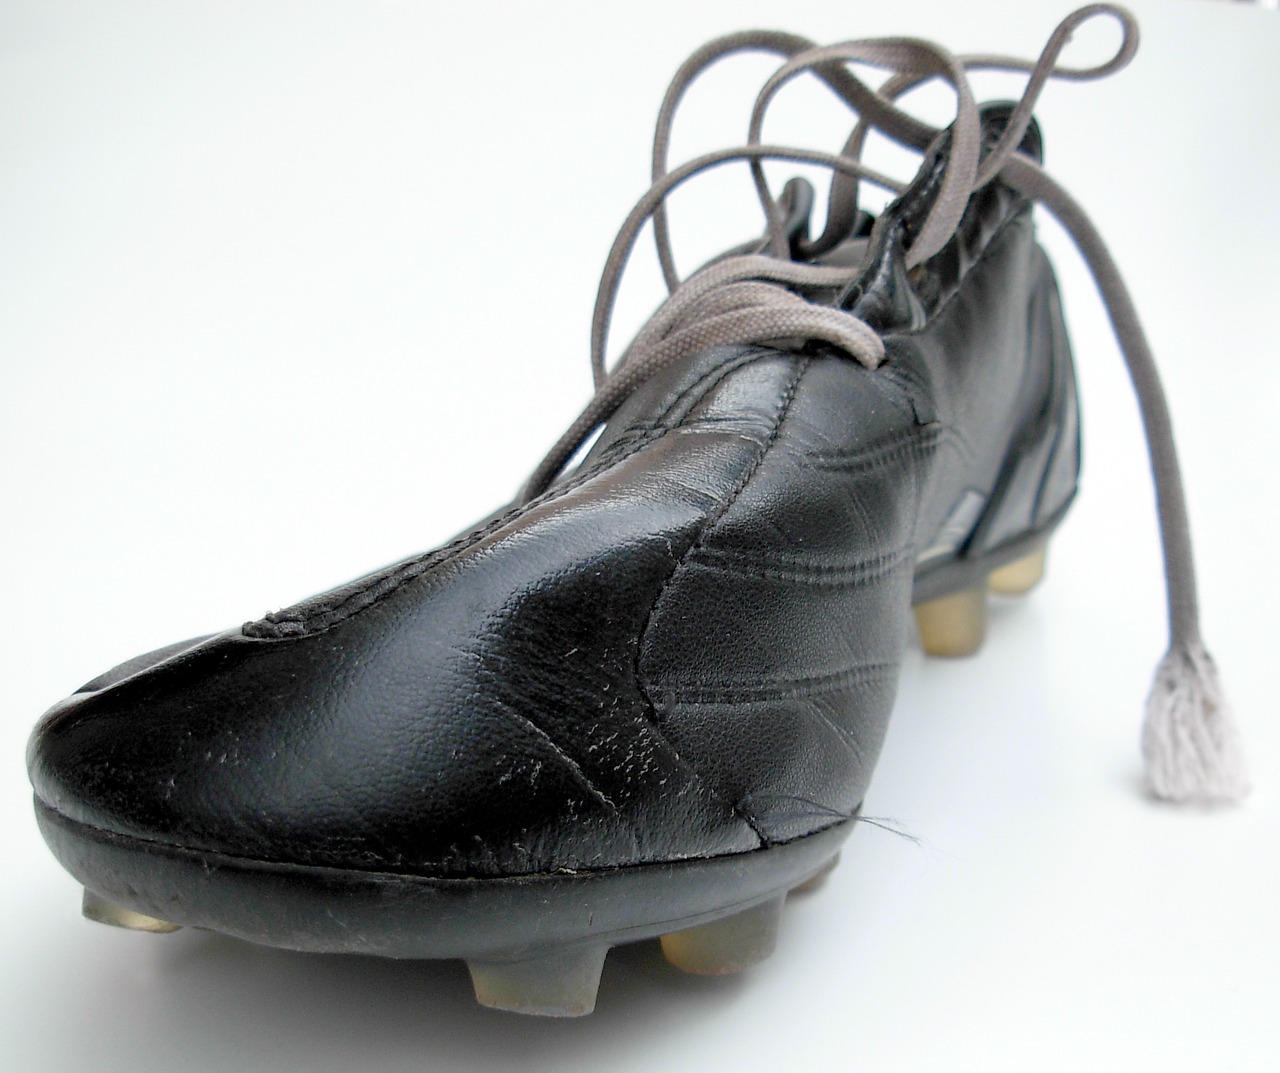 shoe kicker football boot free photo